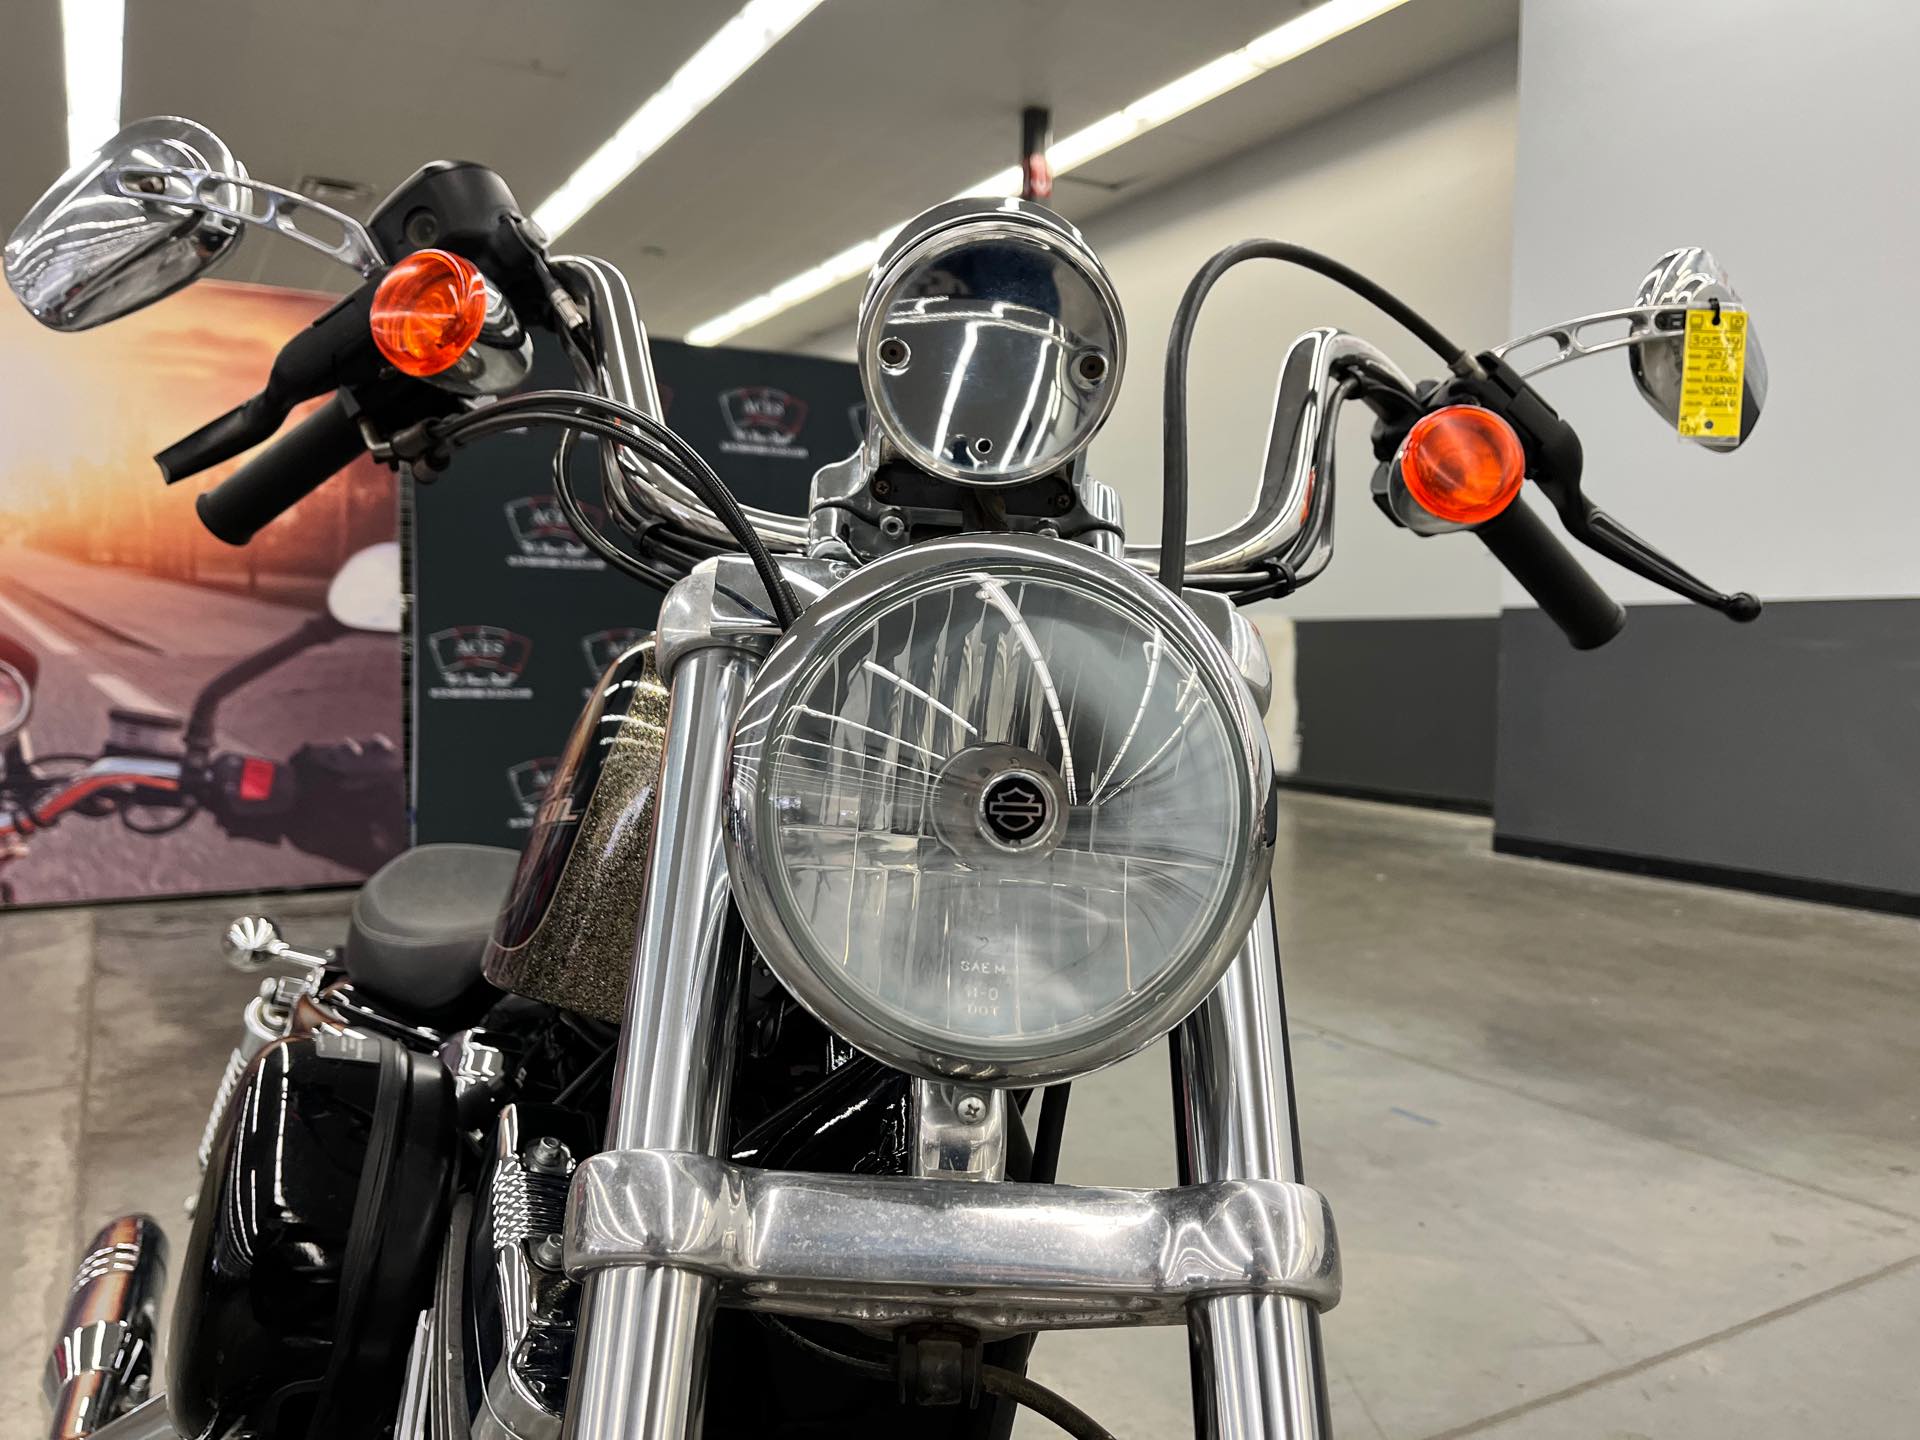 2016 Harley-Davidson Sportster Seventy-Two at Aces Motorcycles - Denver